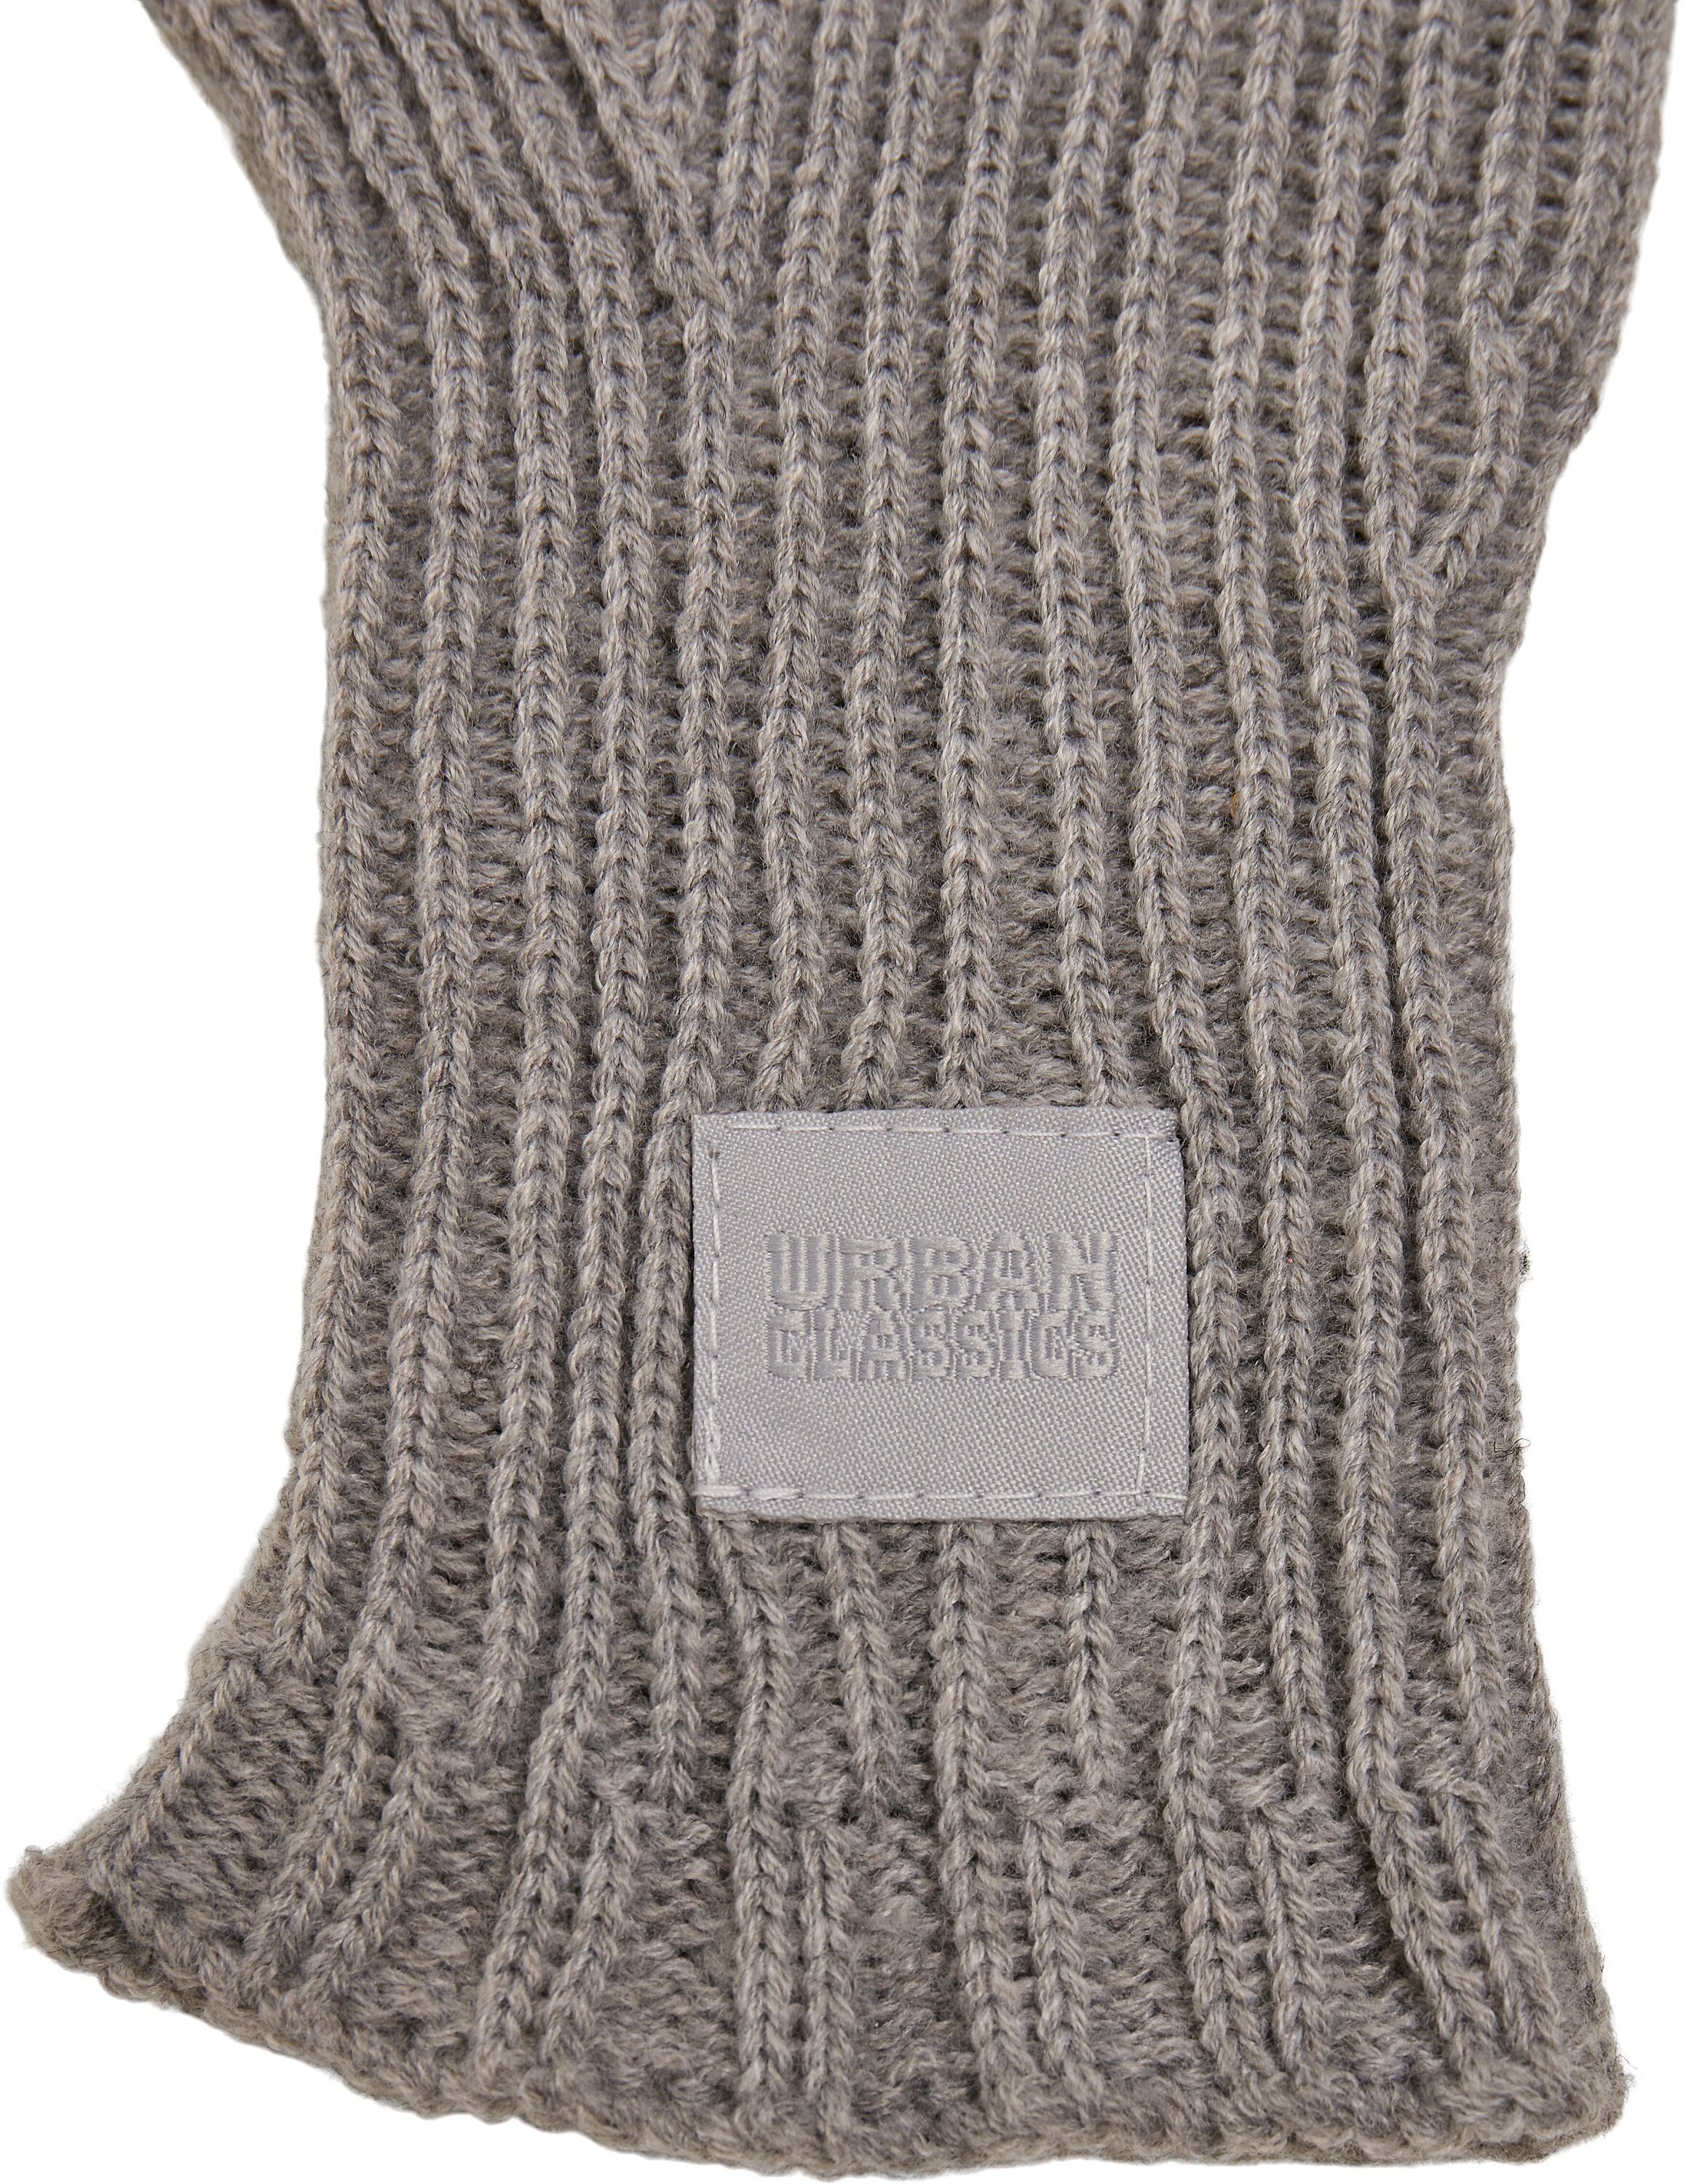 Mix Unisex Knitted URBAN Wool Gloves CLASSICS Smart Baumwollhandschuhe heathergrey